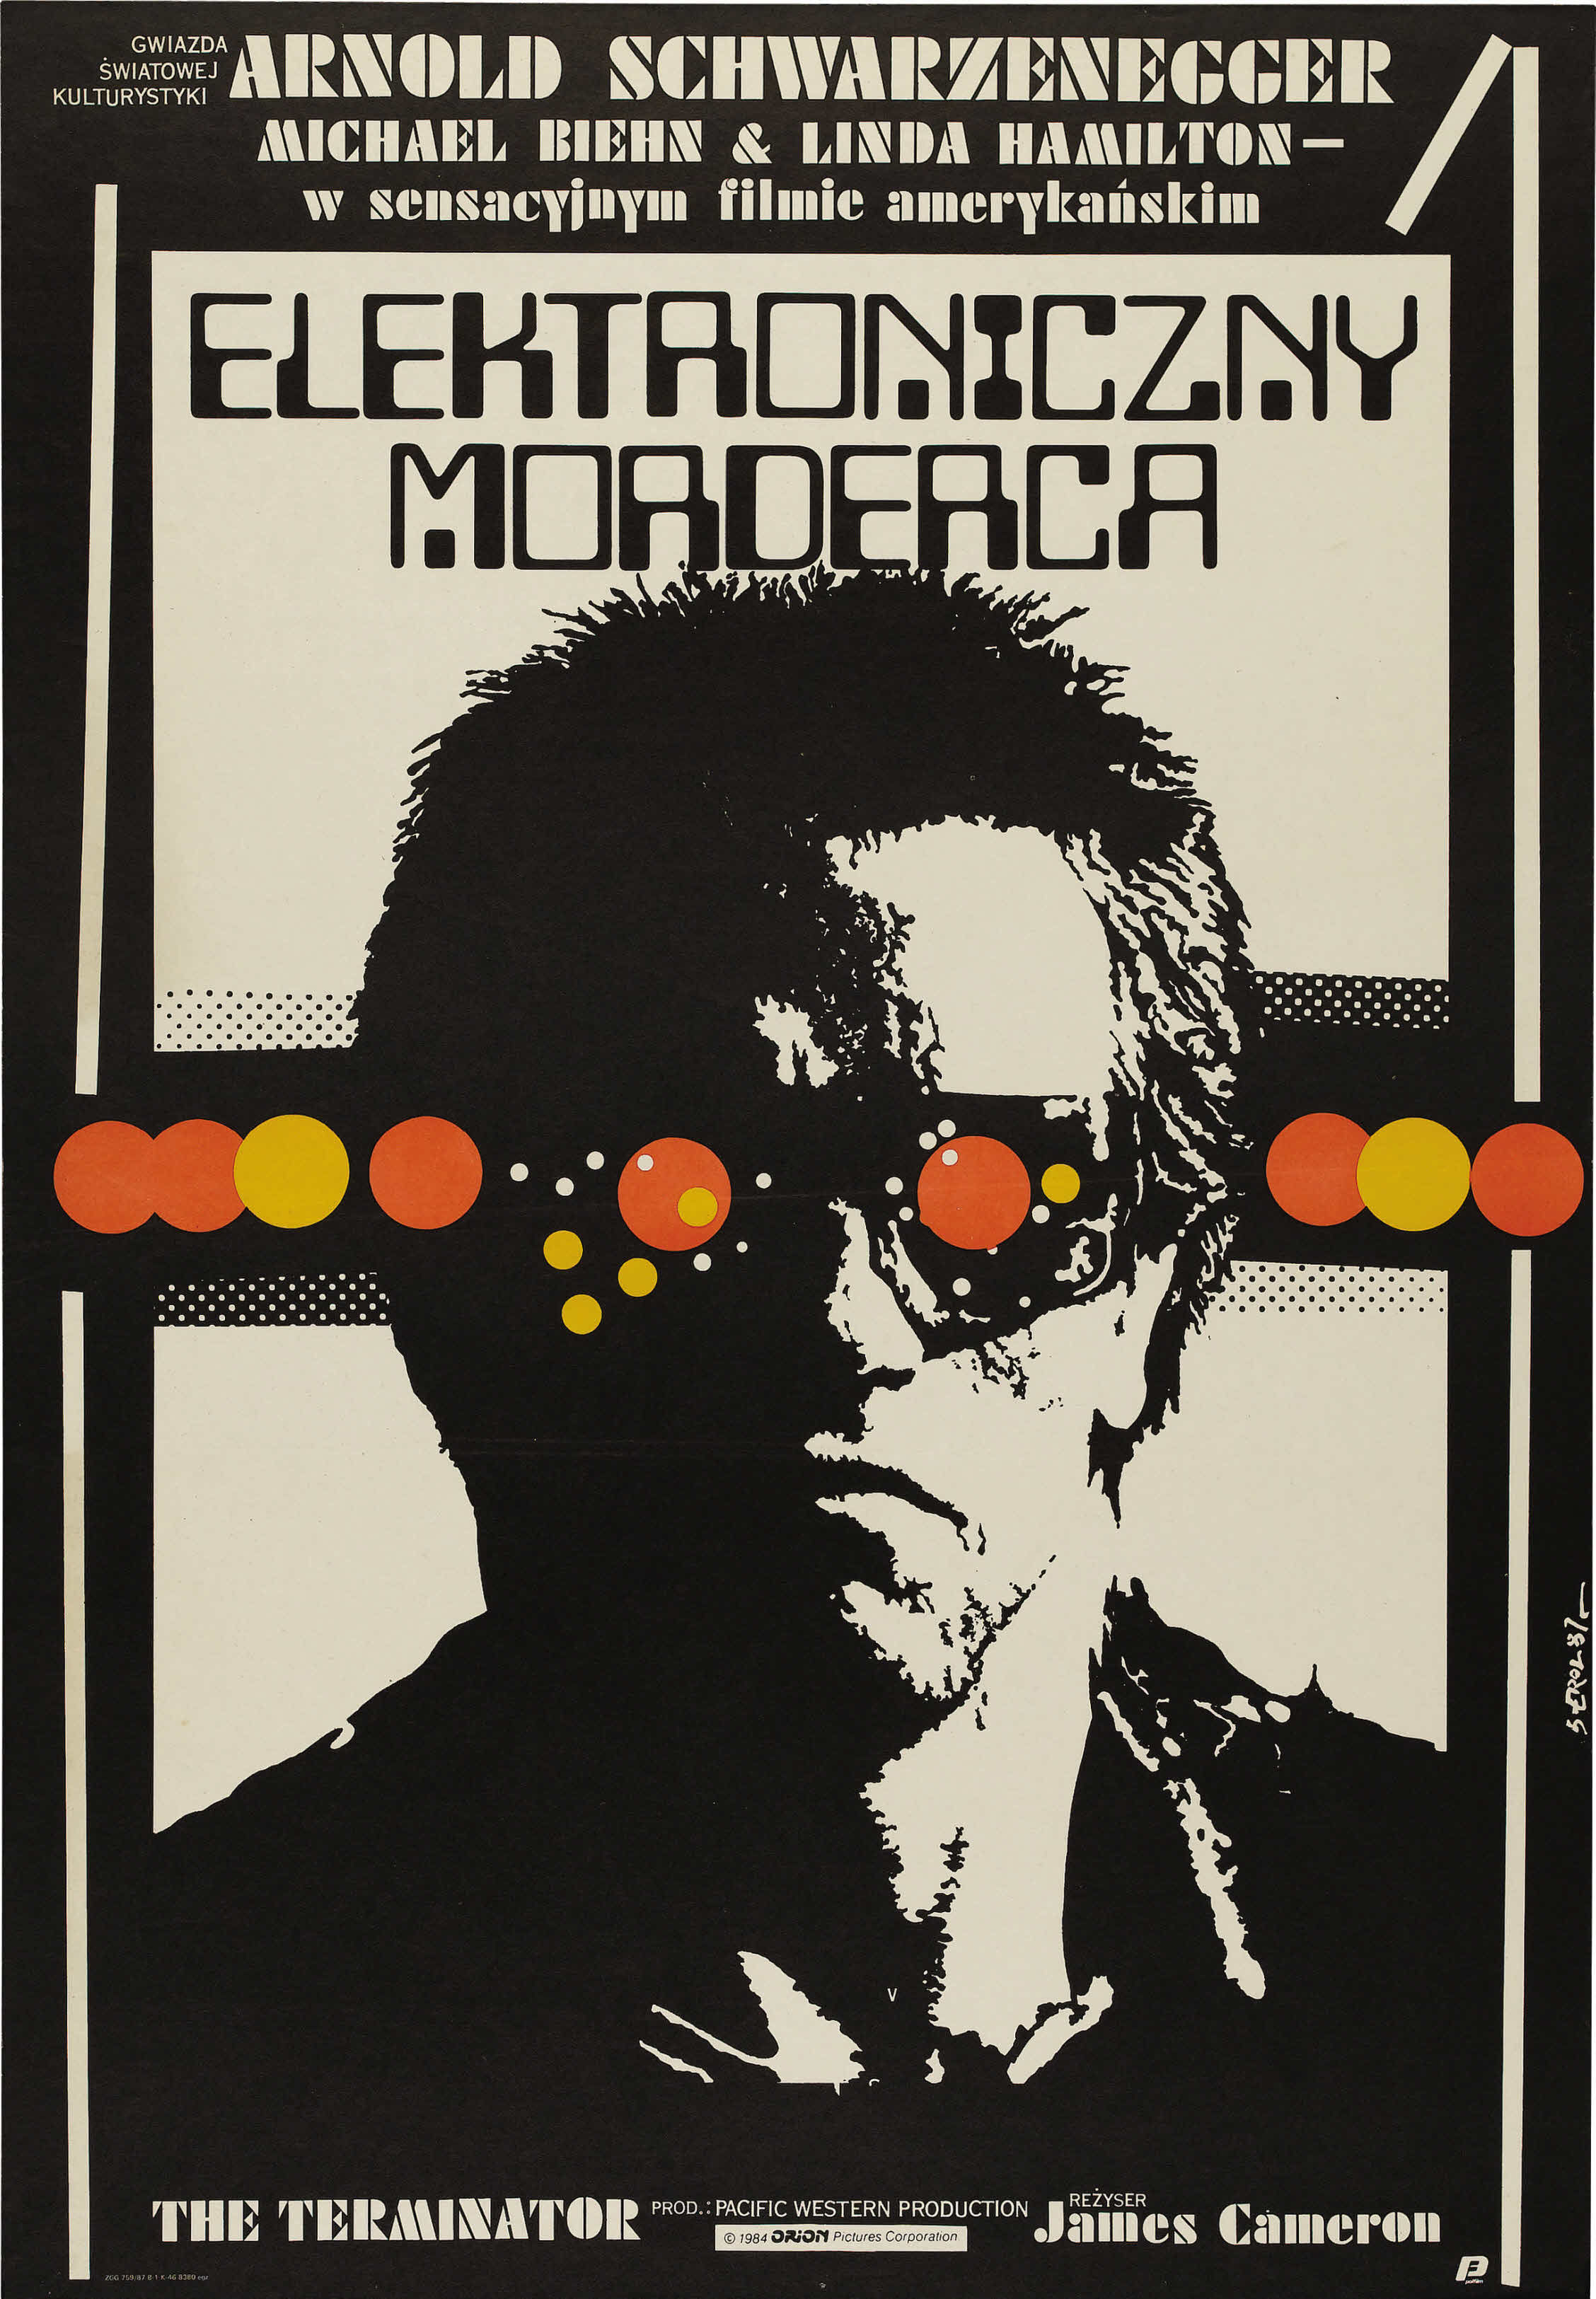 Arnold Schwarzenegger, movie posters - desktop wallpaper